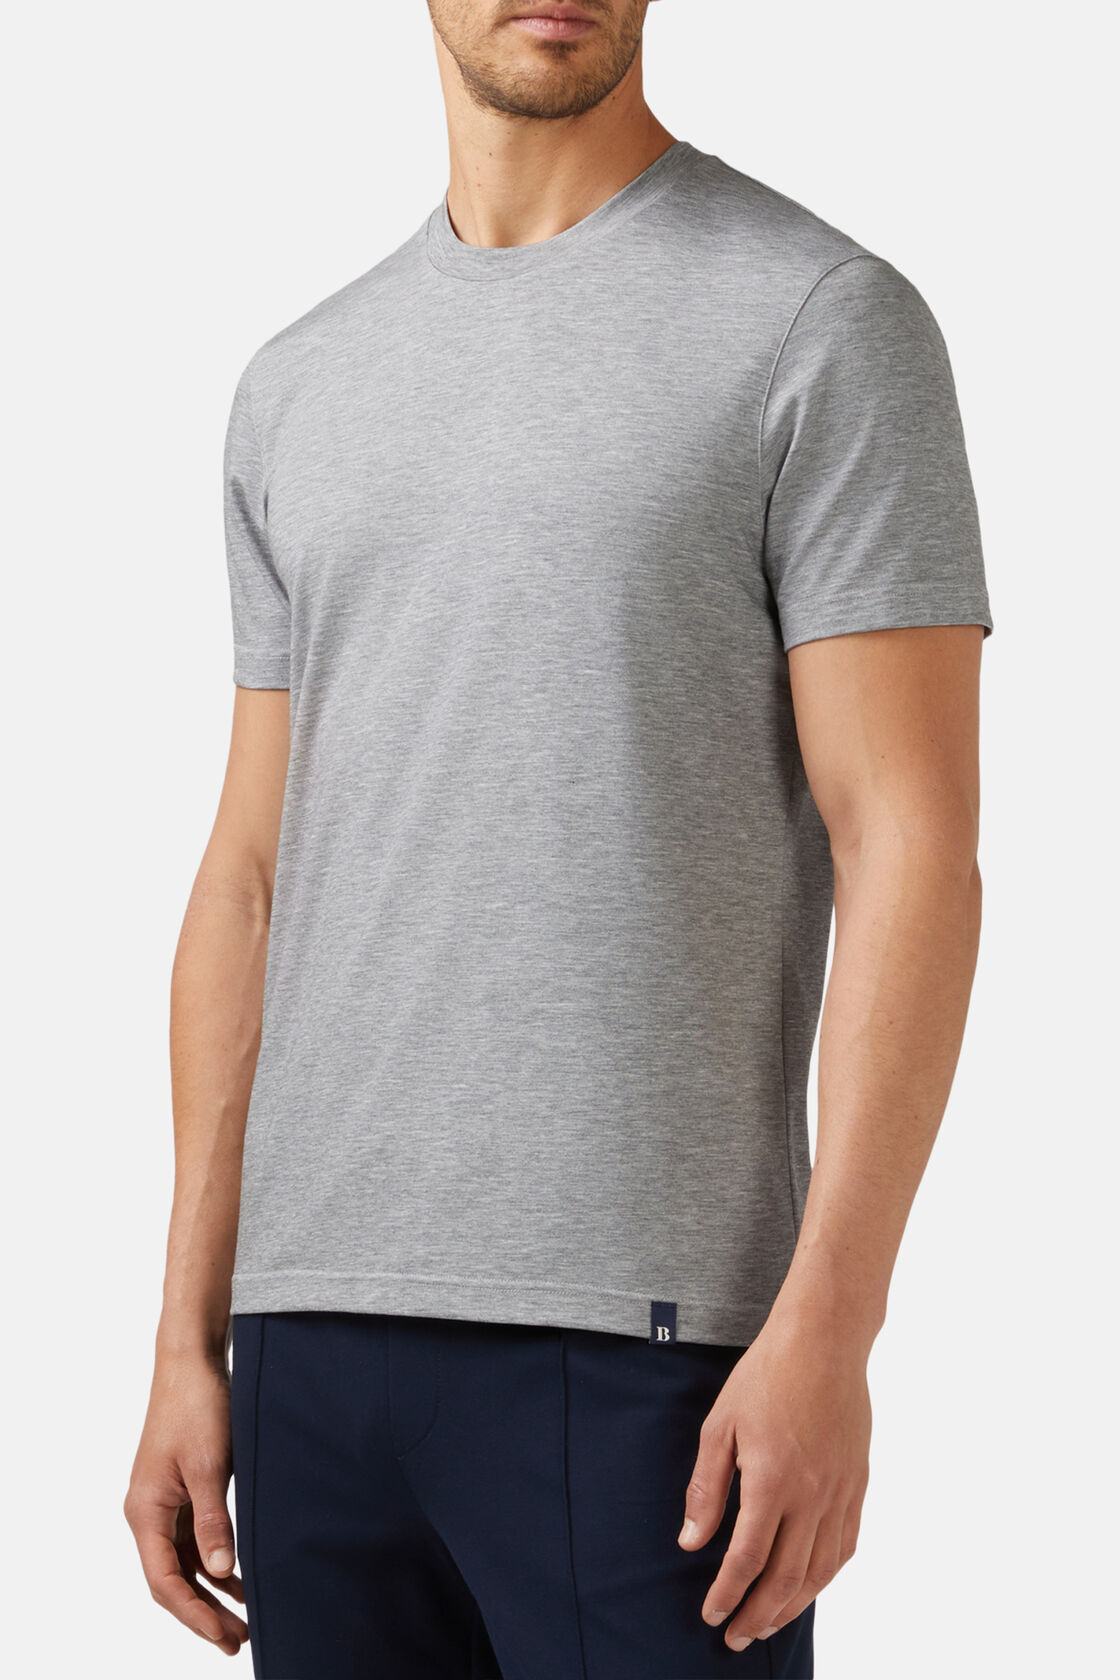 T-Shirt in Cotton, Nylon & Tencel, Grey, hi-res